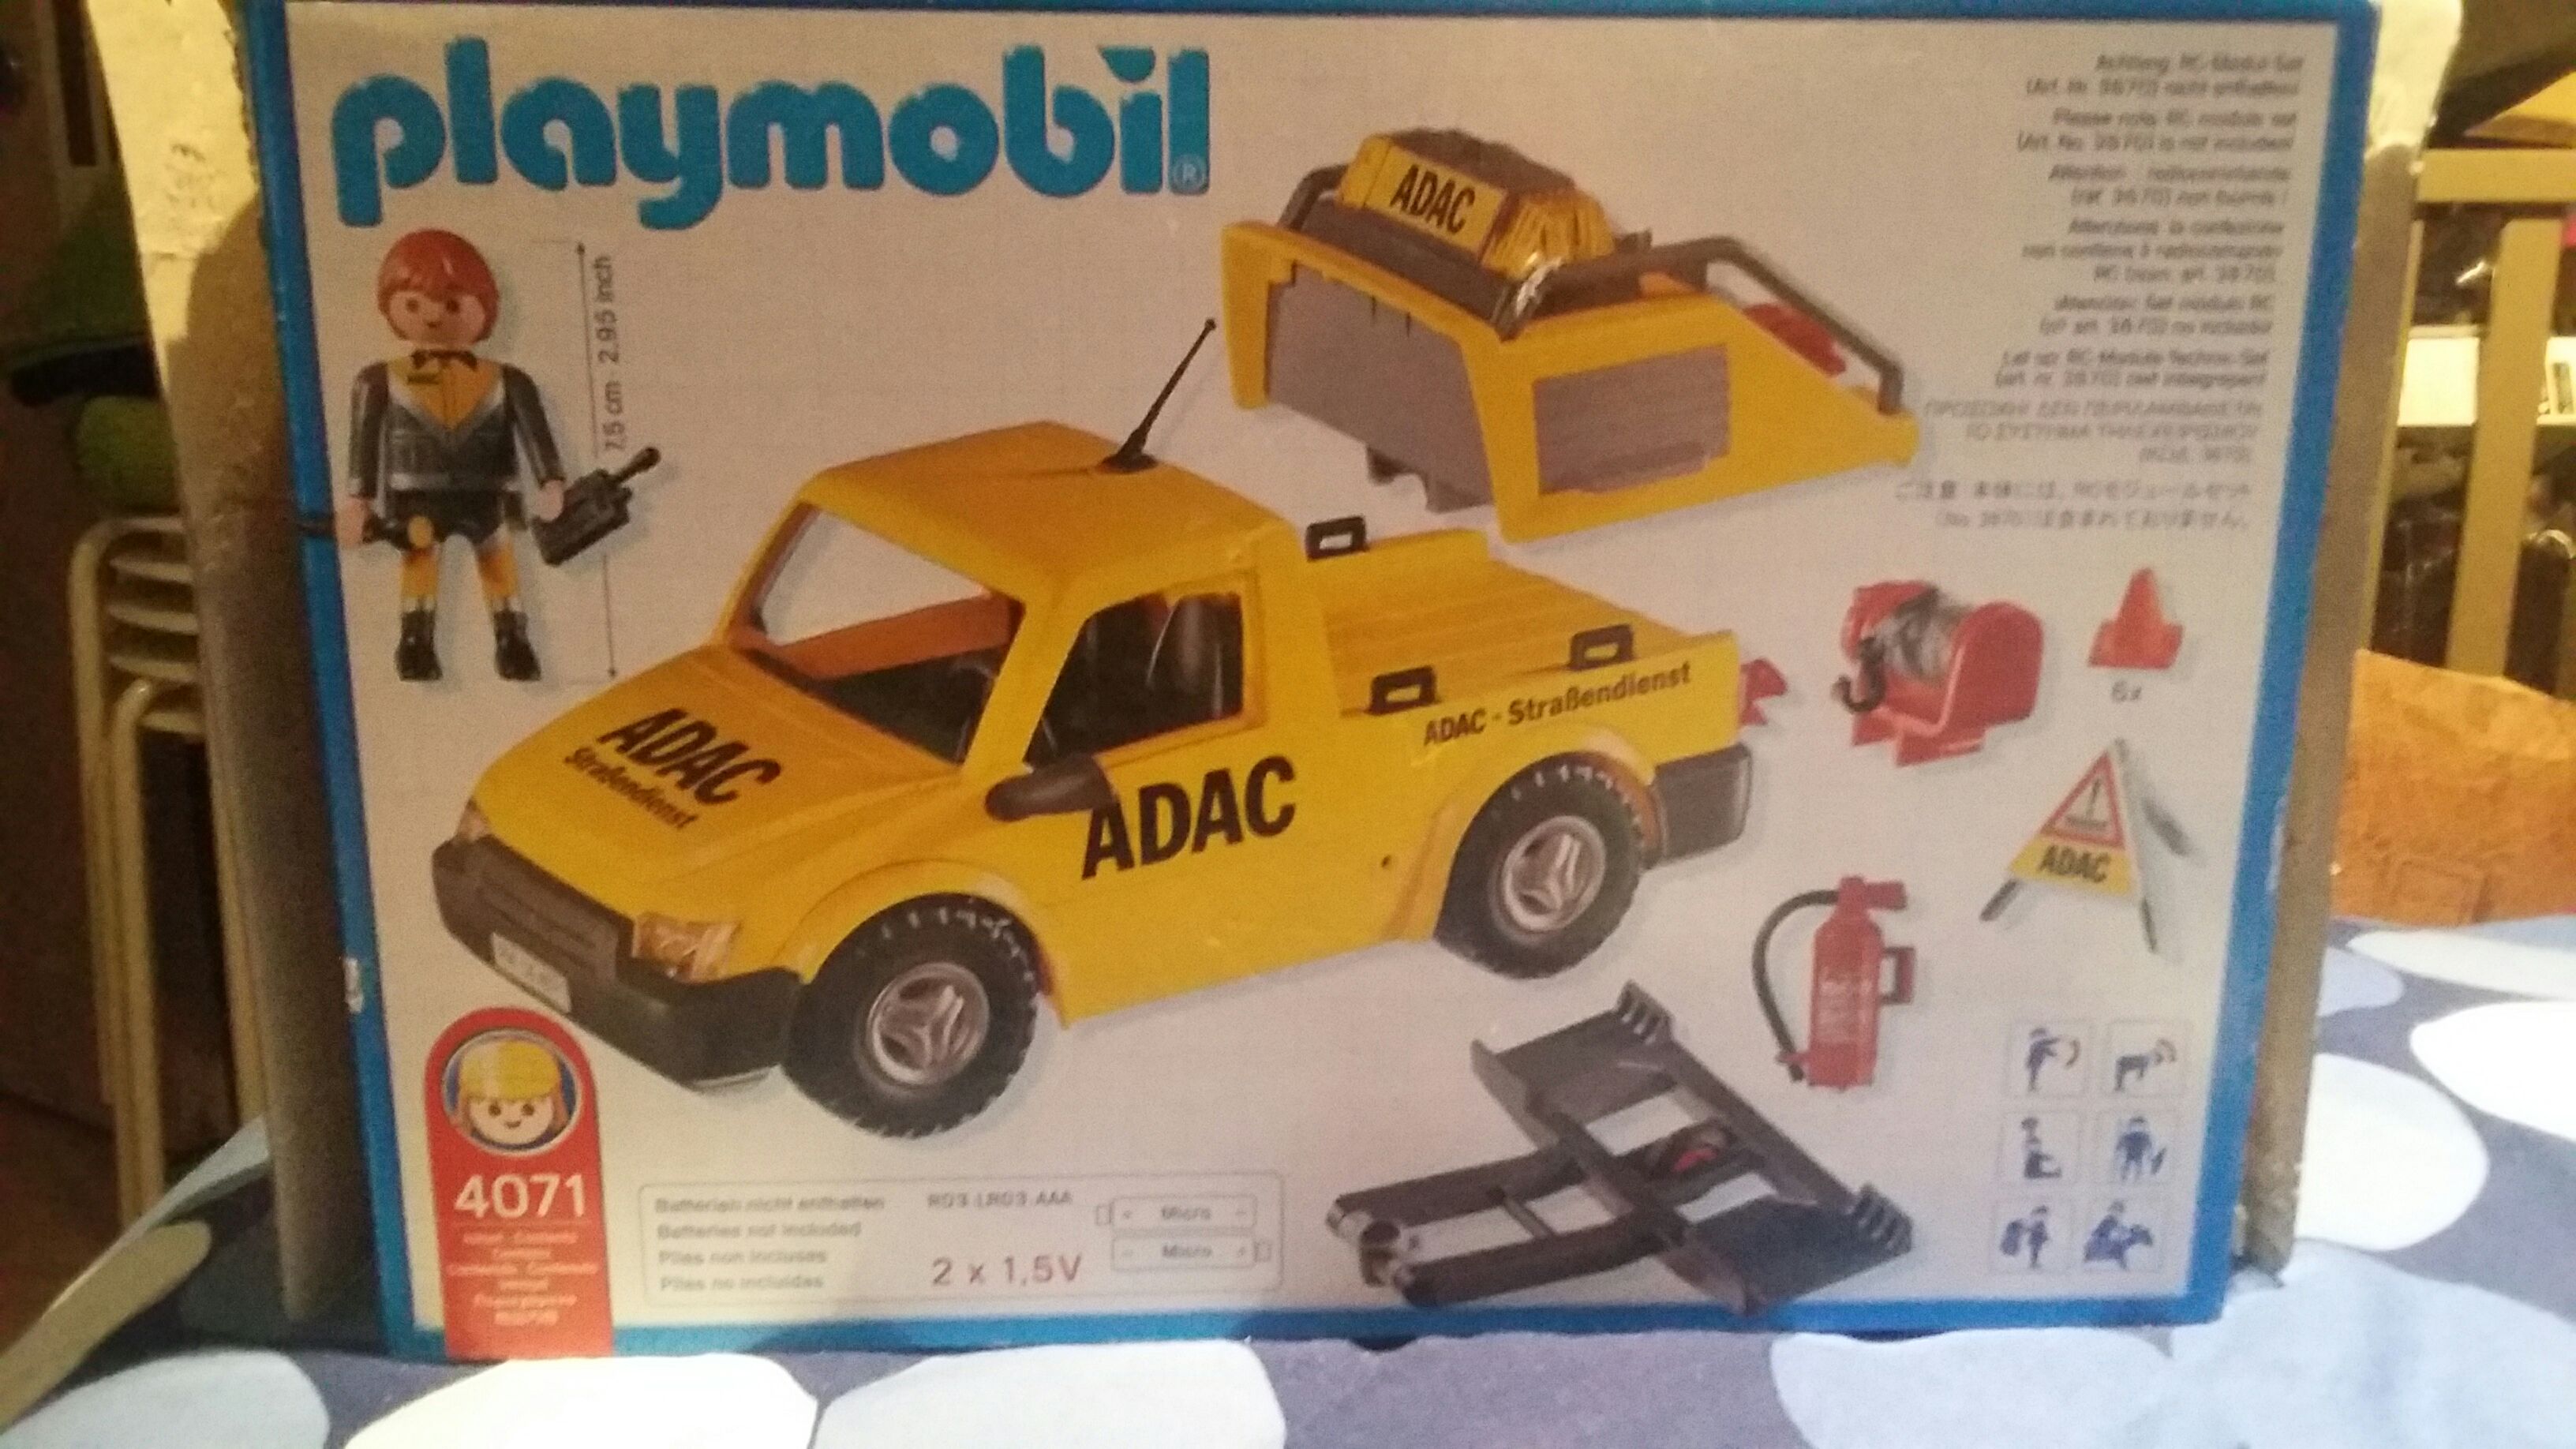 ADAC Afsleepwagen - City life (4071) playmobil collectible [Barcode 4008789040718] - Main Image 2